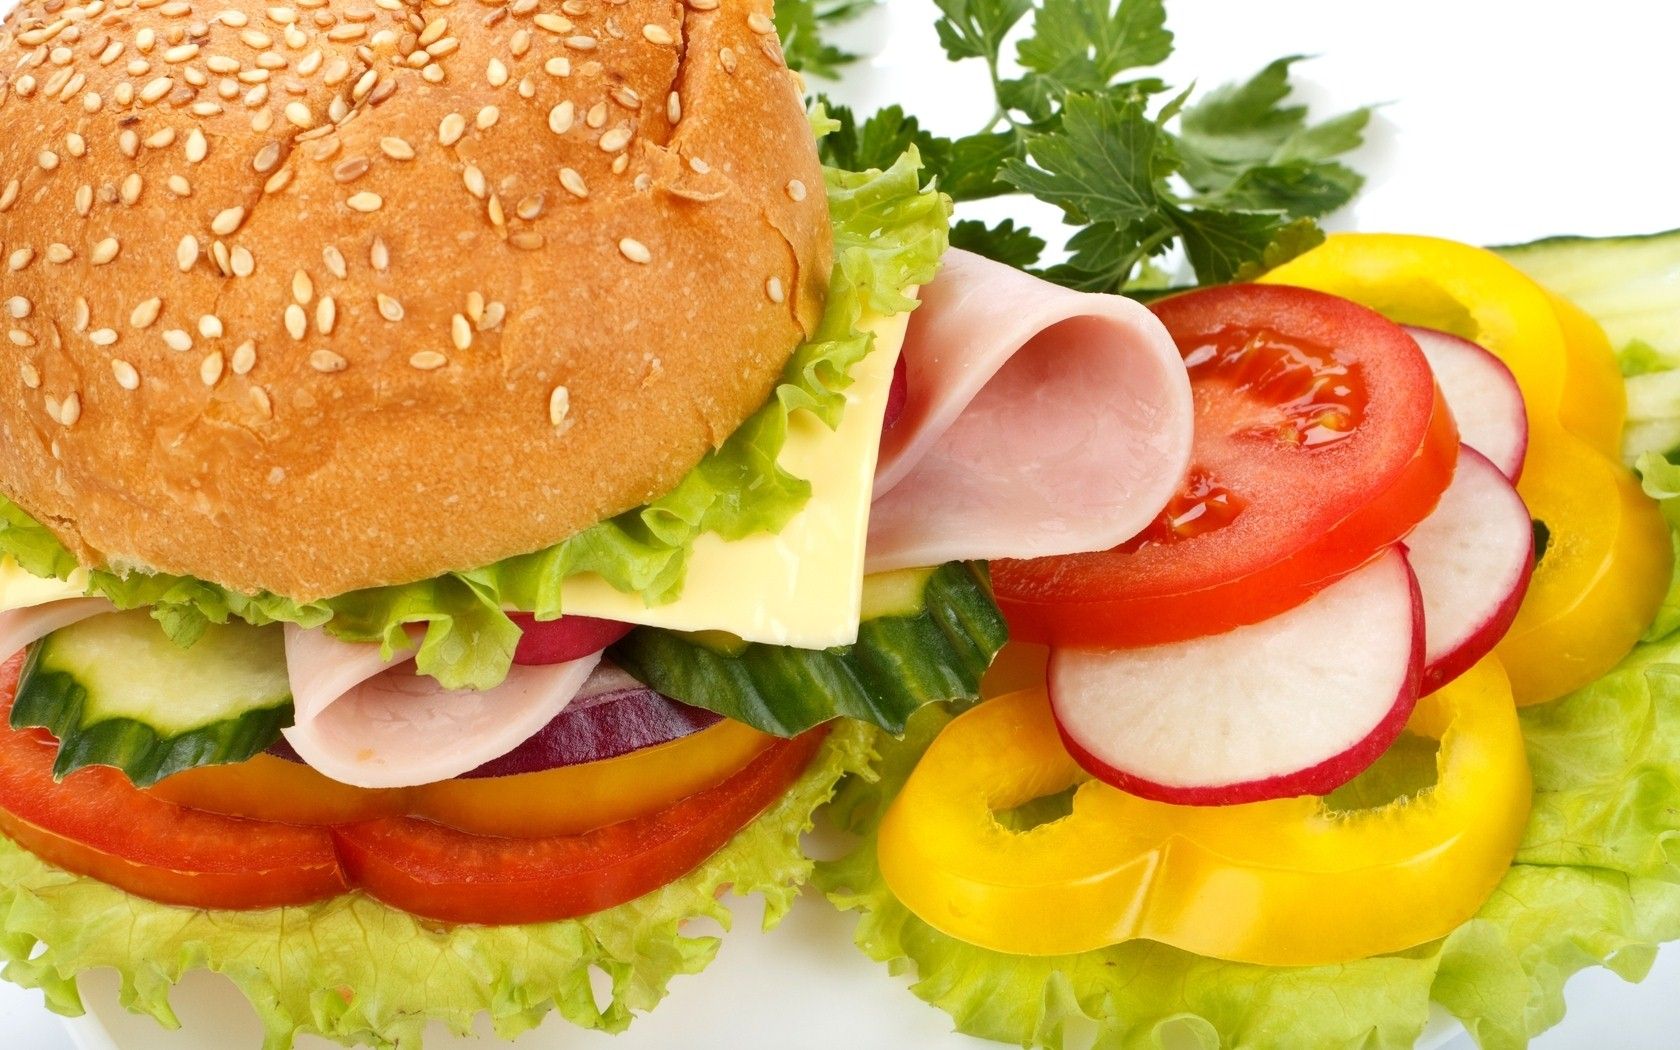 Salad and Non Veg Burger Photo